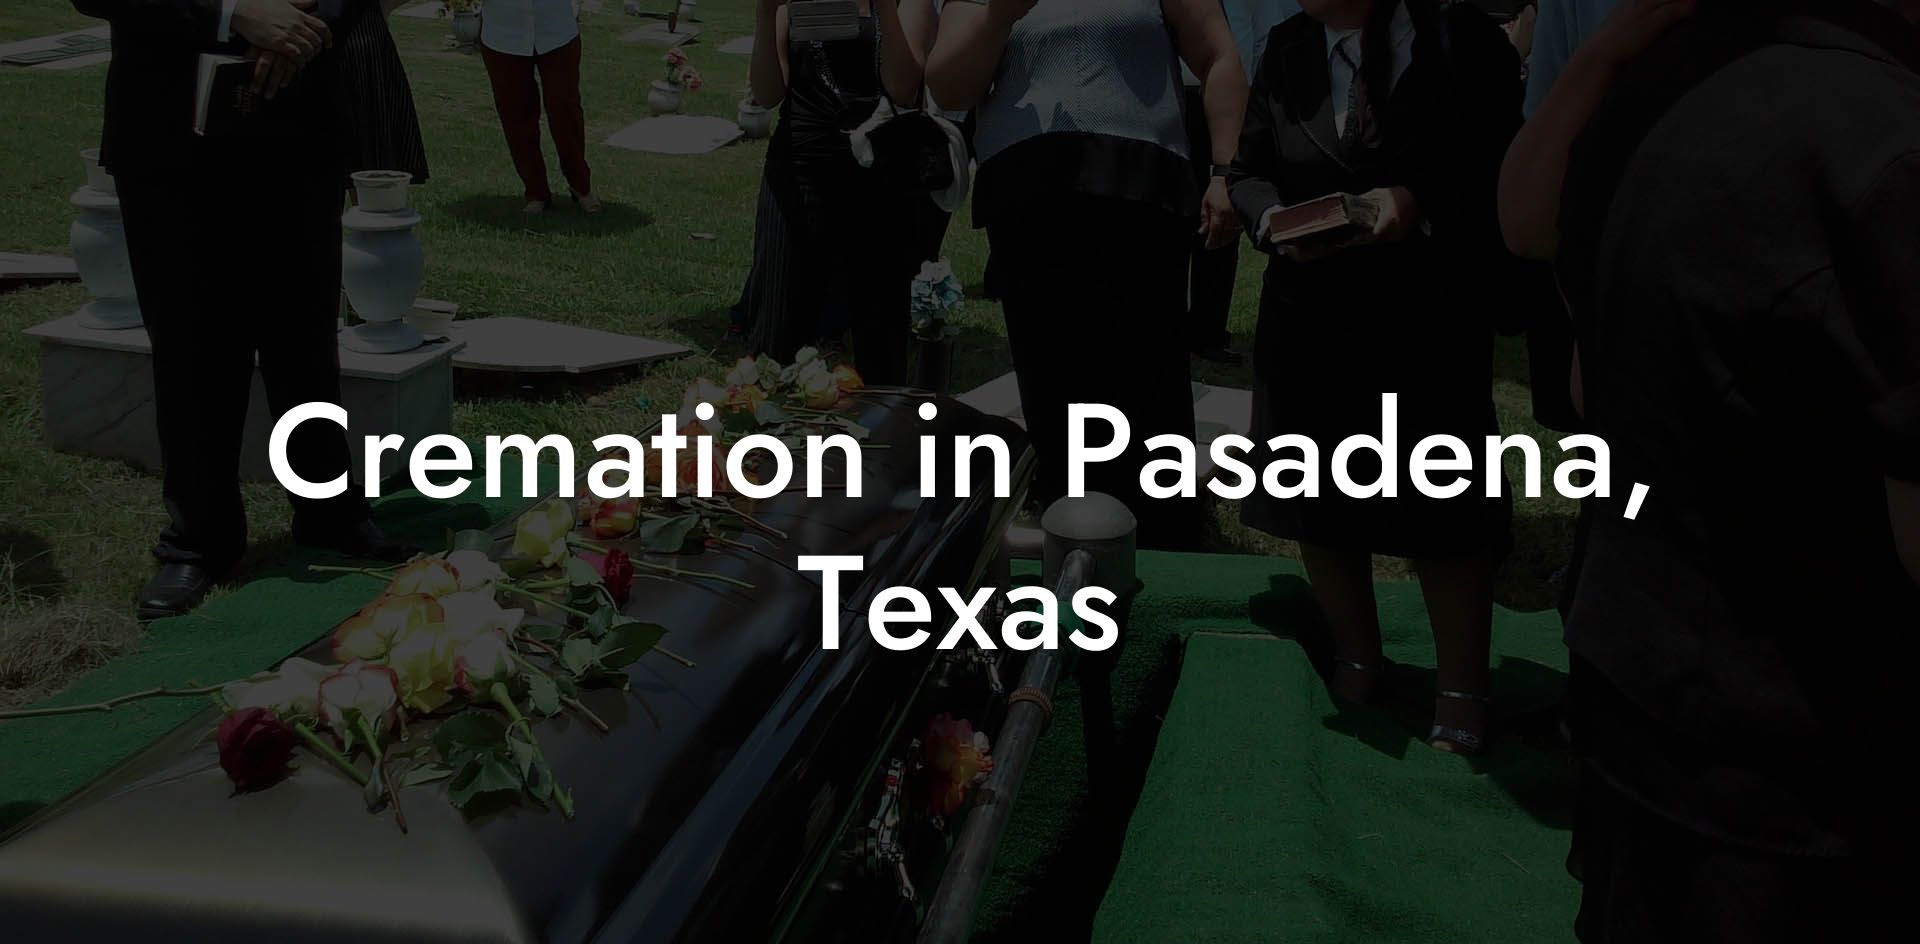 Cremation in Pasadena, Texas